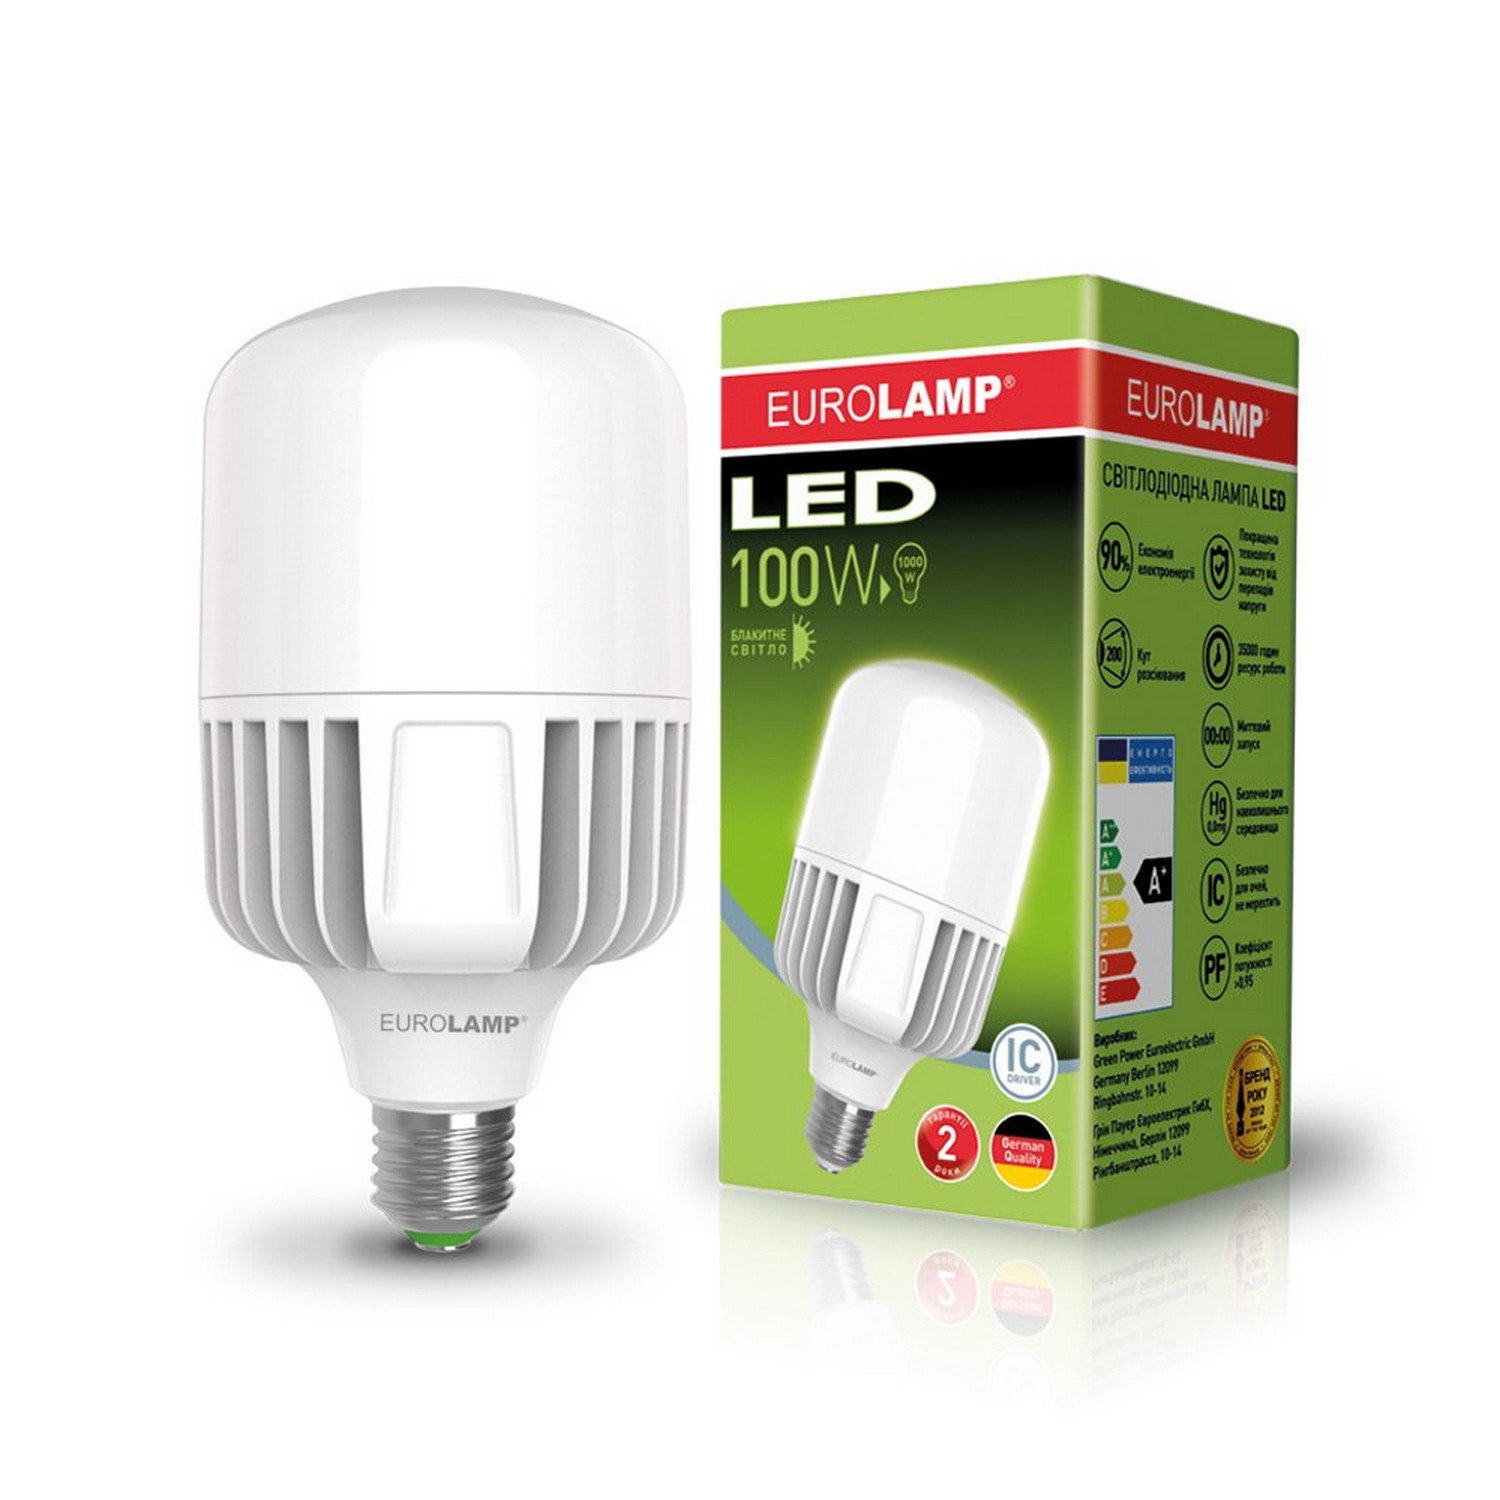 Відгуки лампа Eurolamp LED 100W E40 6500K